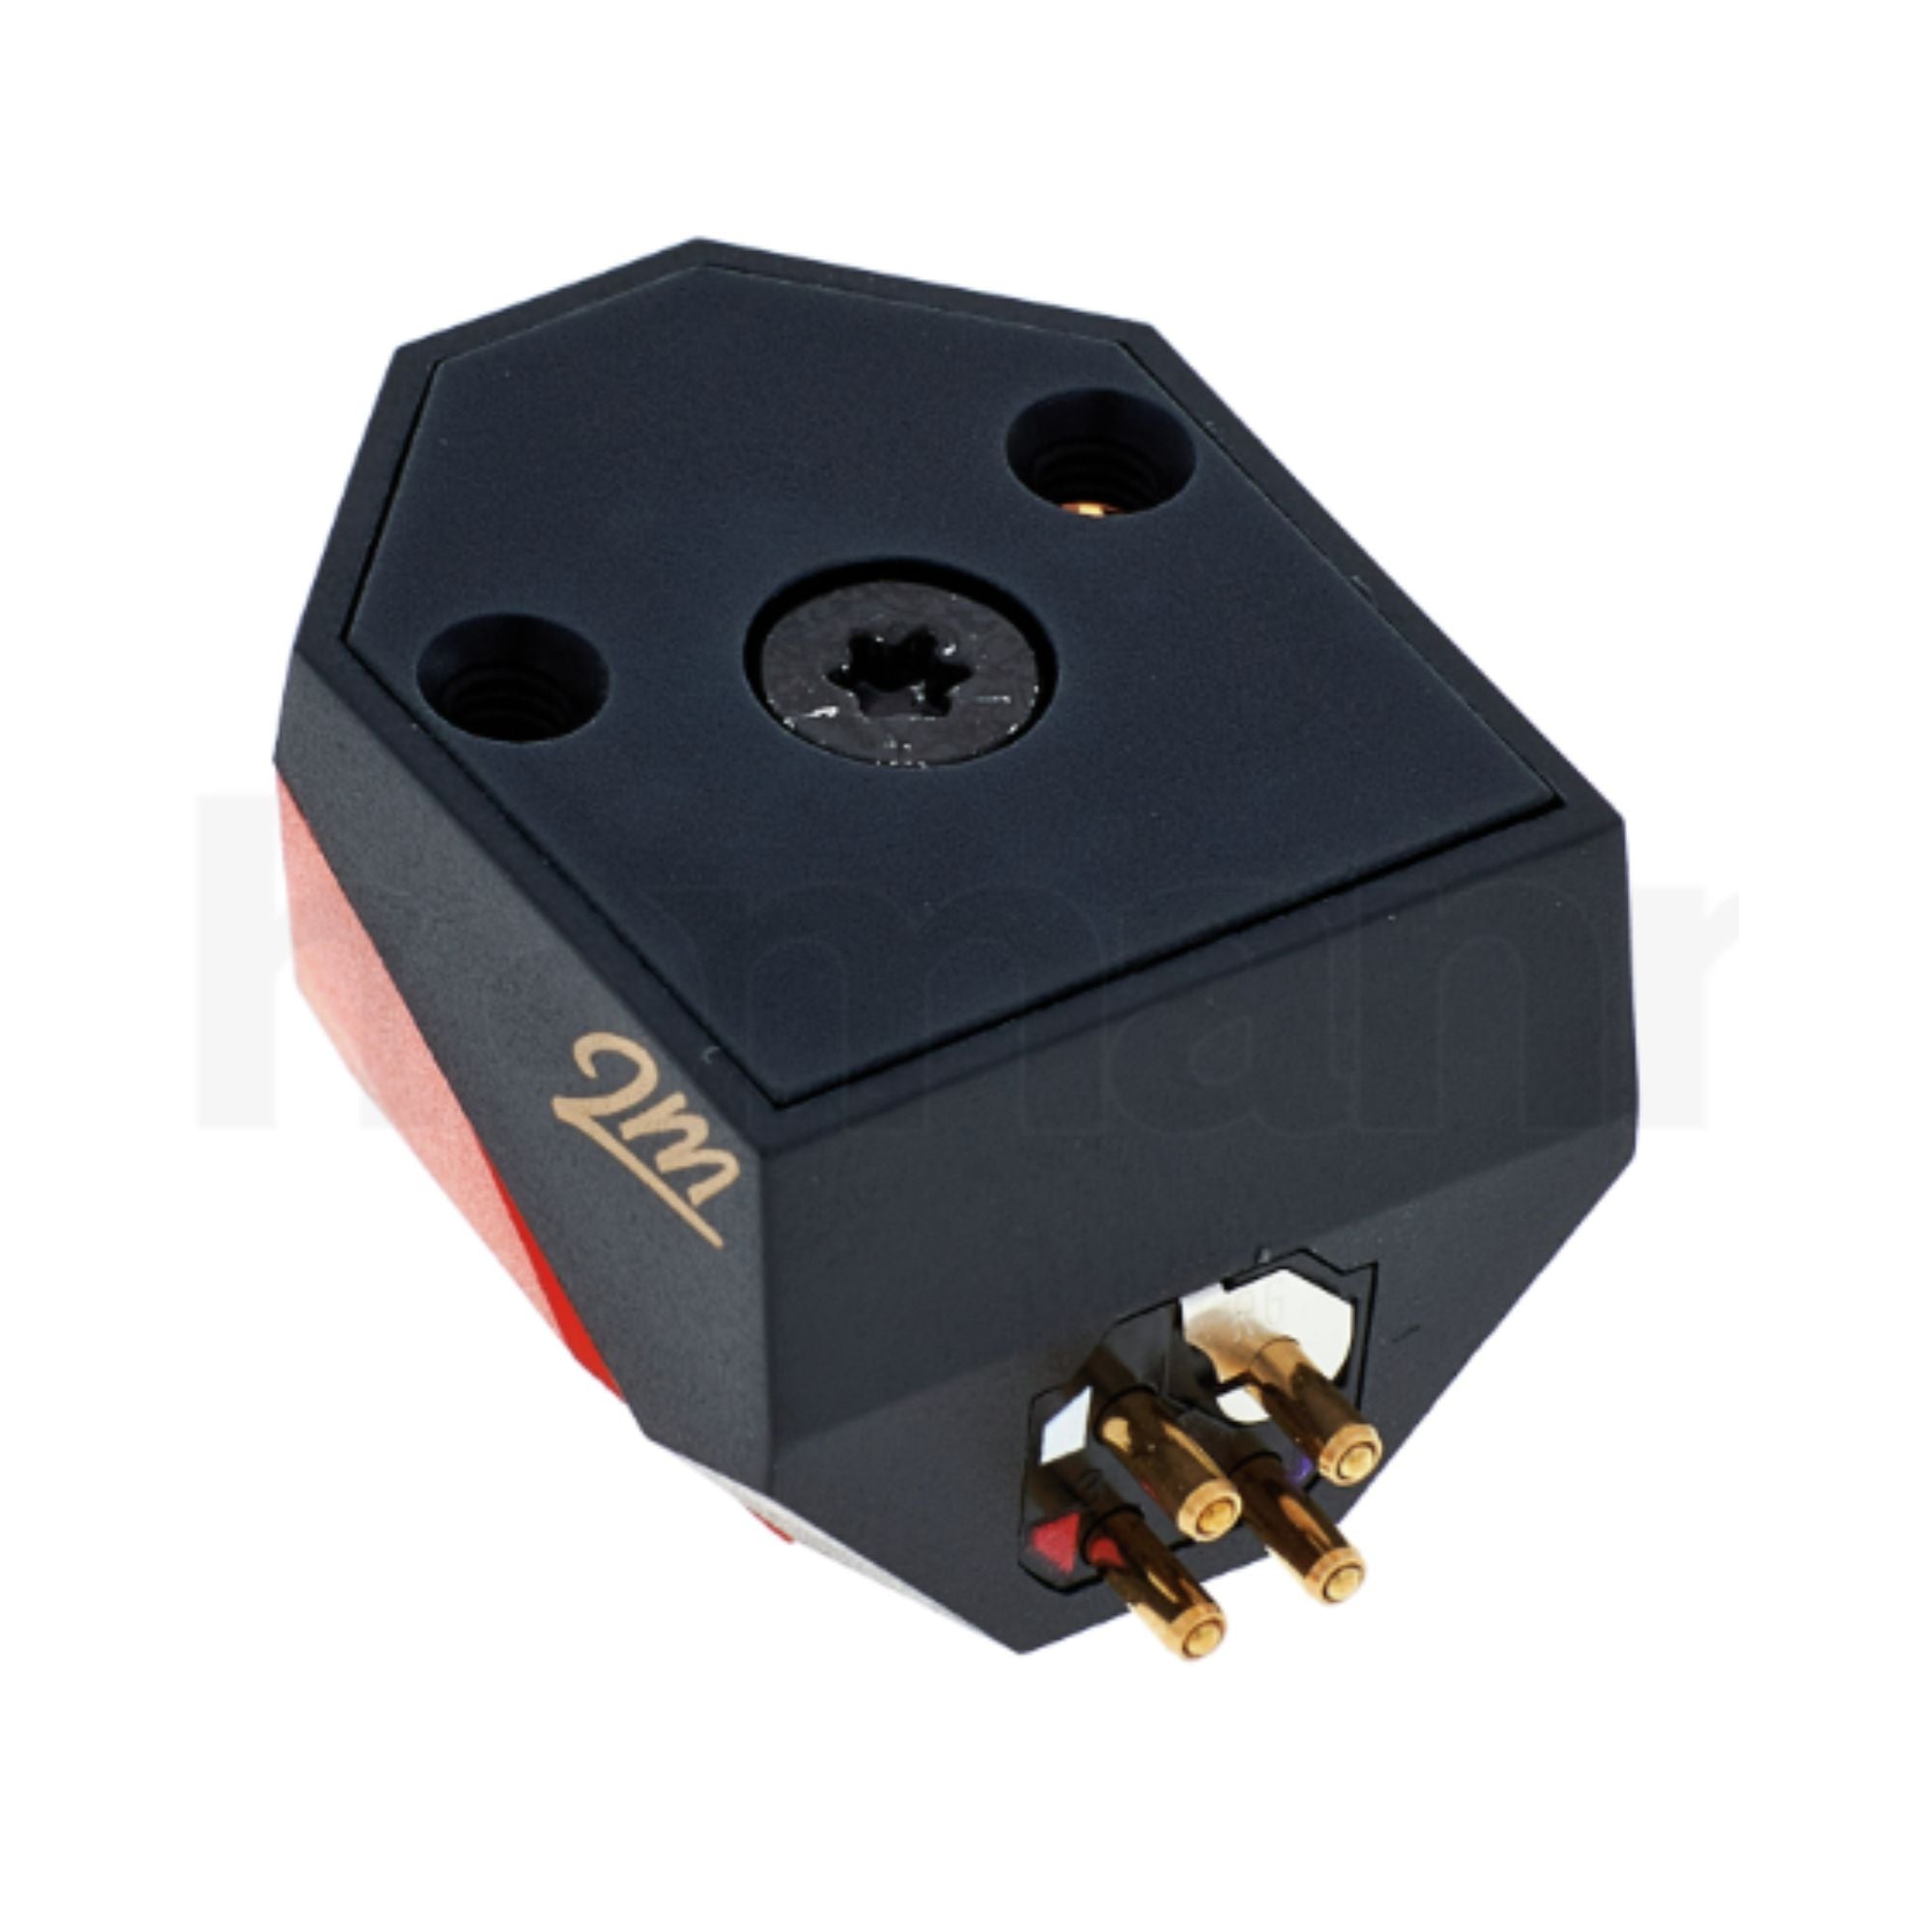 Ortofon 2M Bronze - Moving Magnet Cartridge, Ortofon, Turntable Accessories - AVStore.in